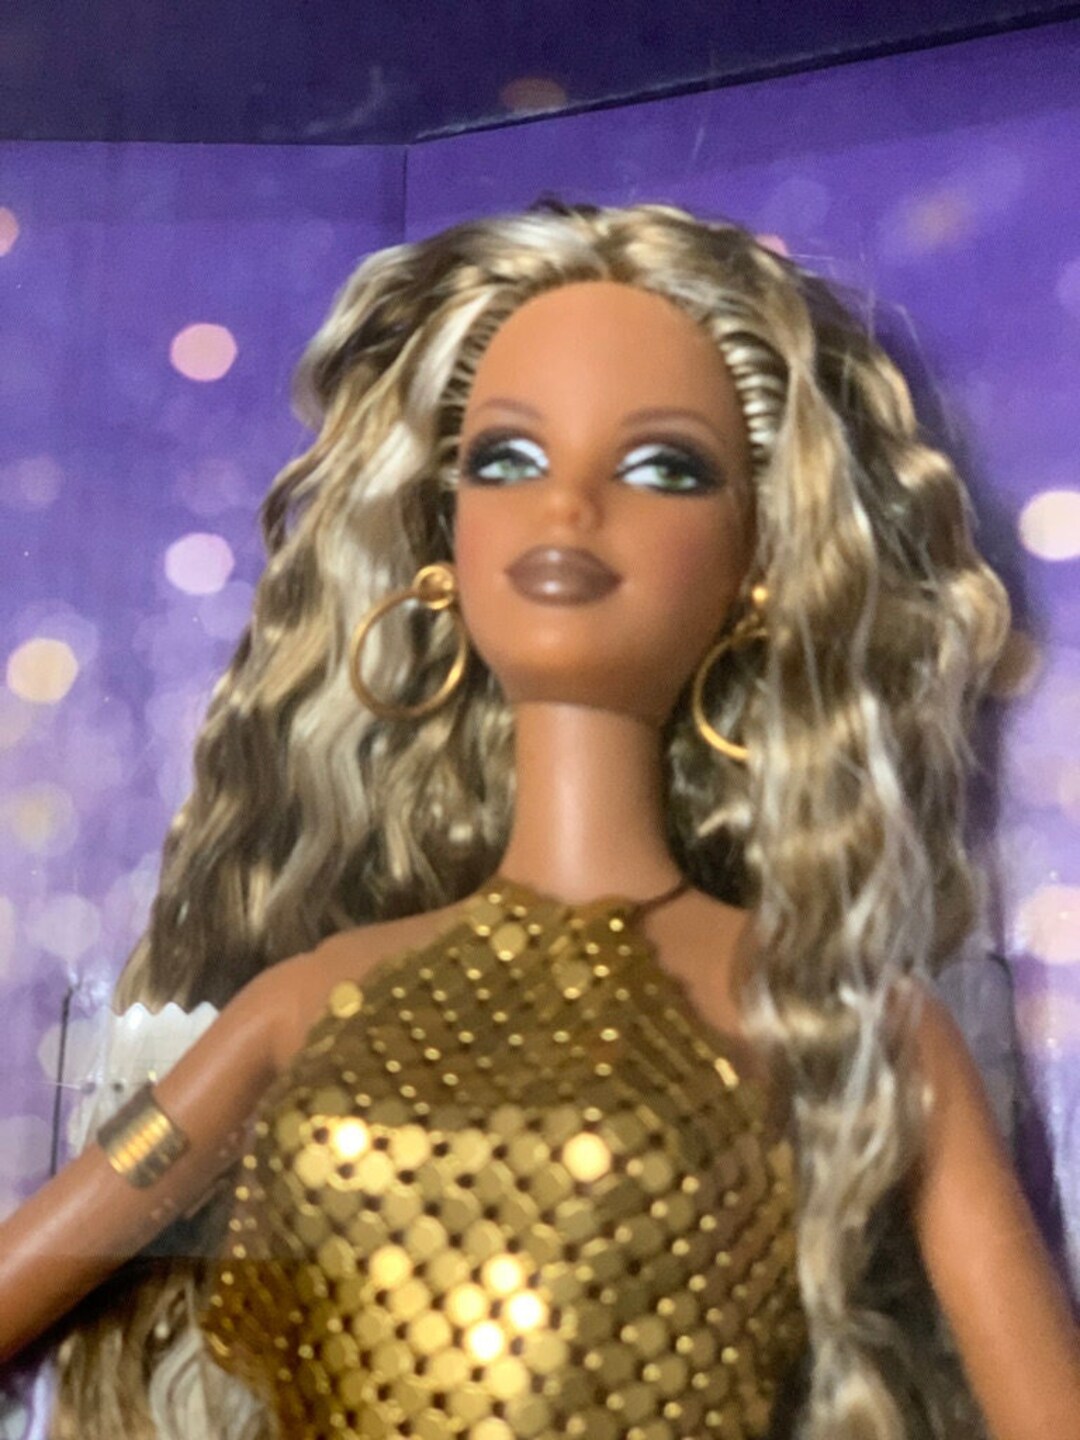 Barbie Fashion Plates All in One Studio